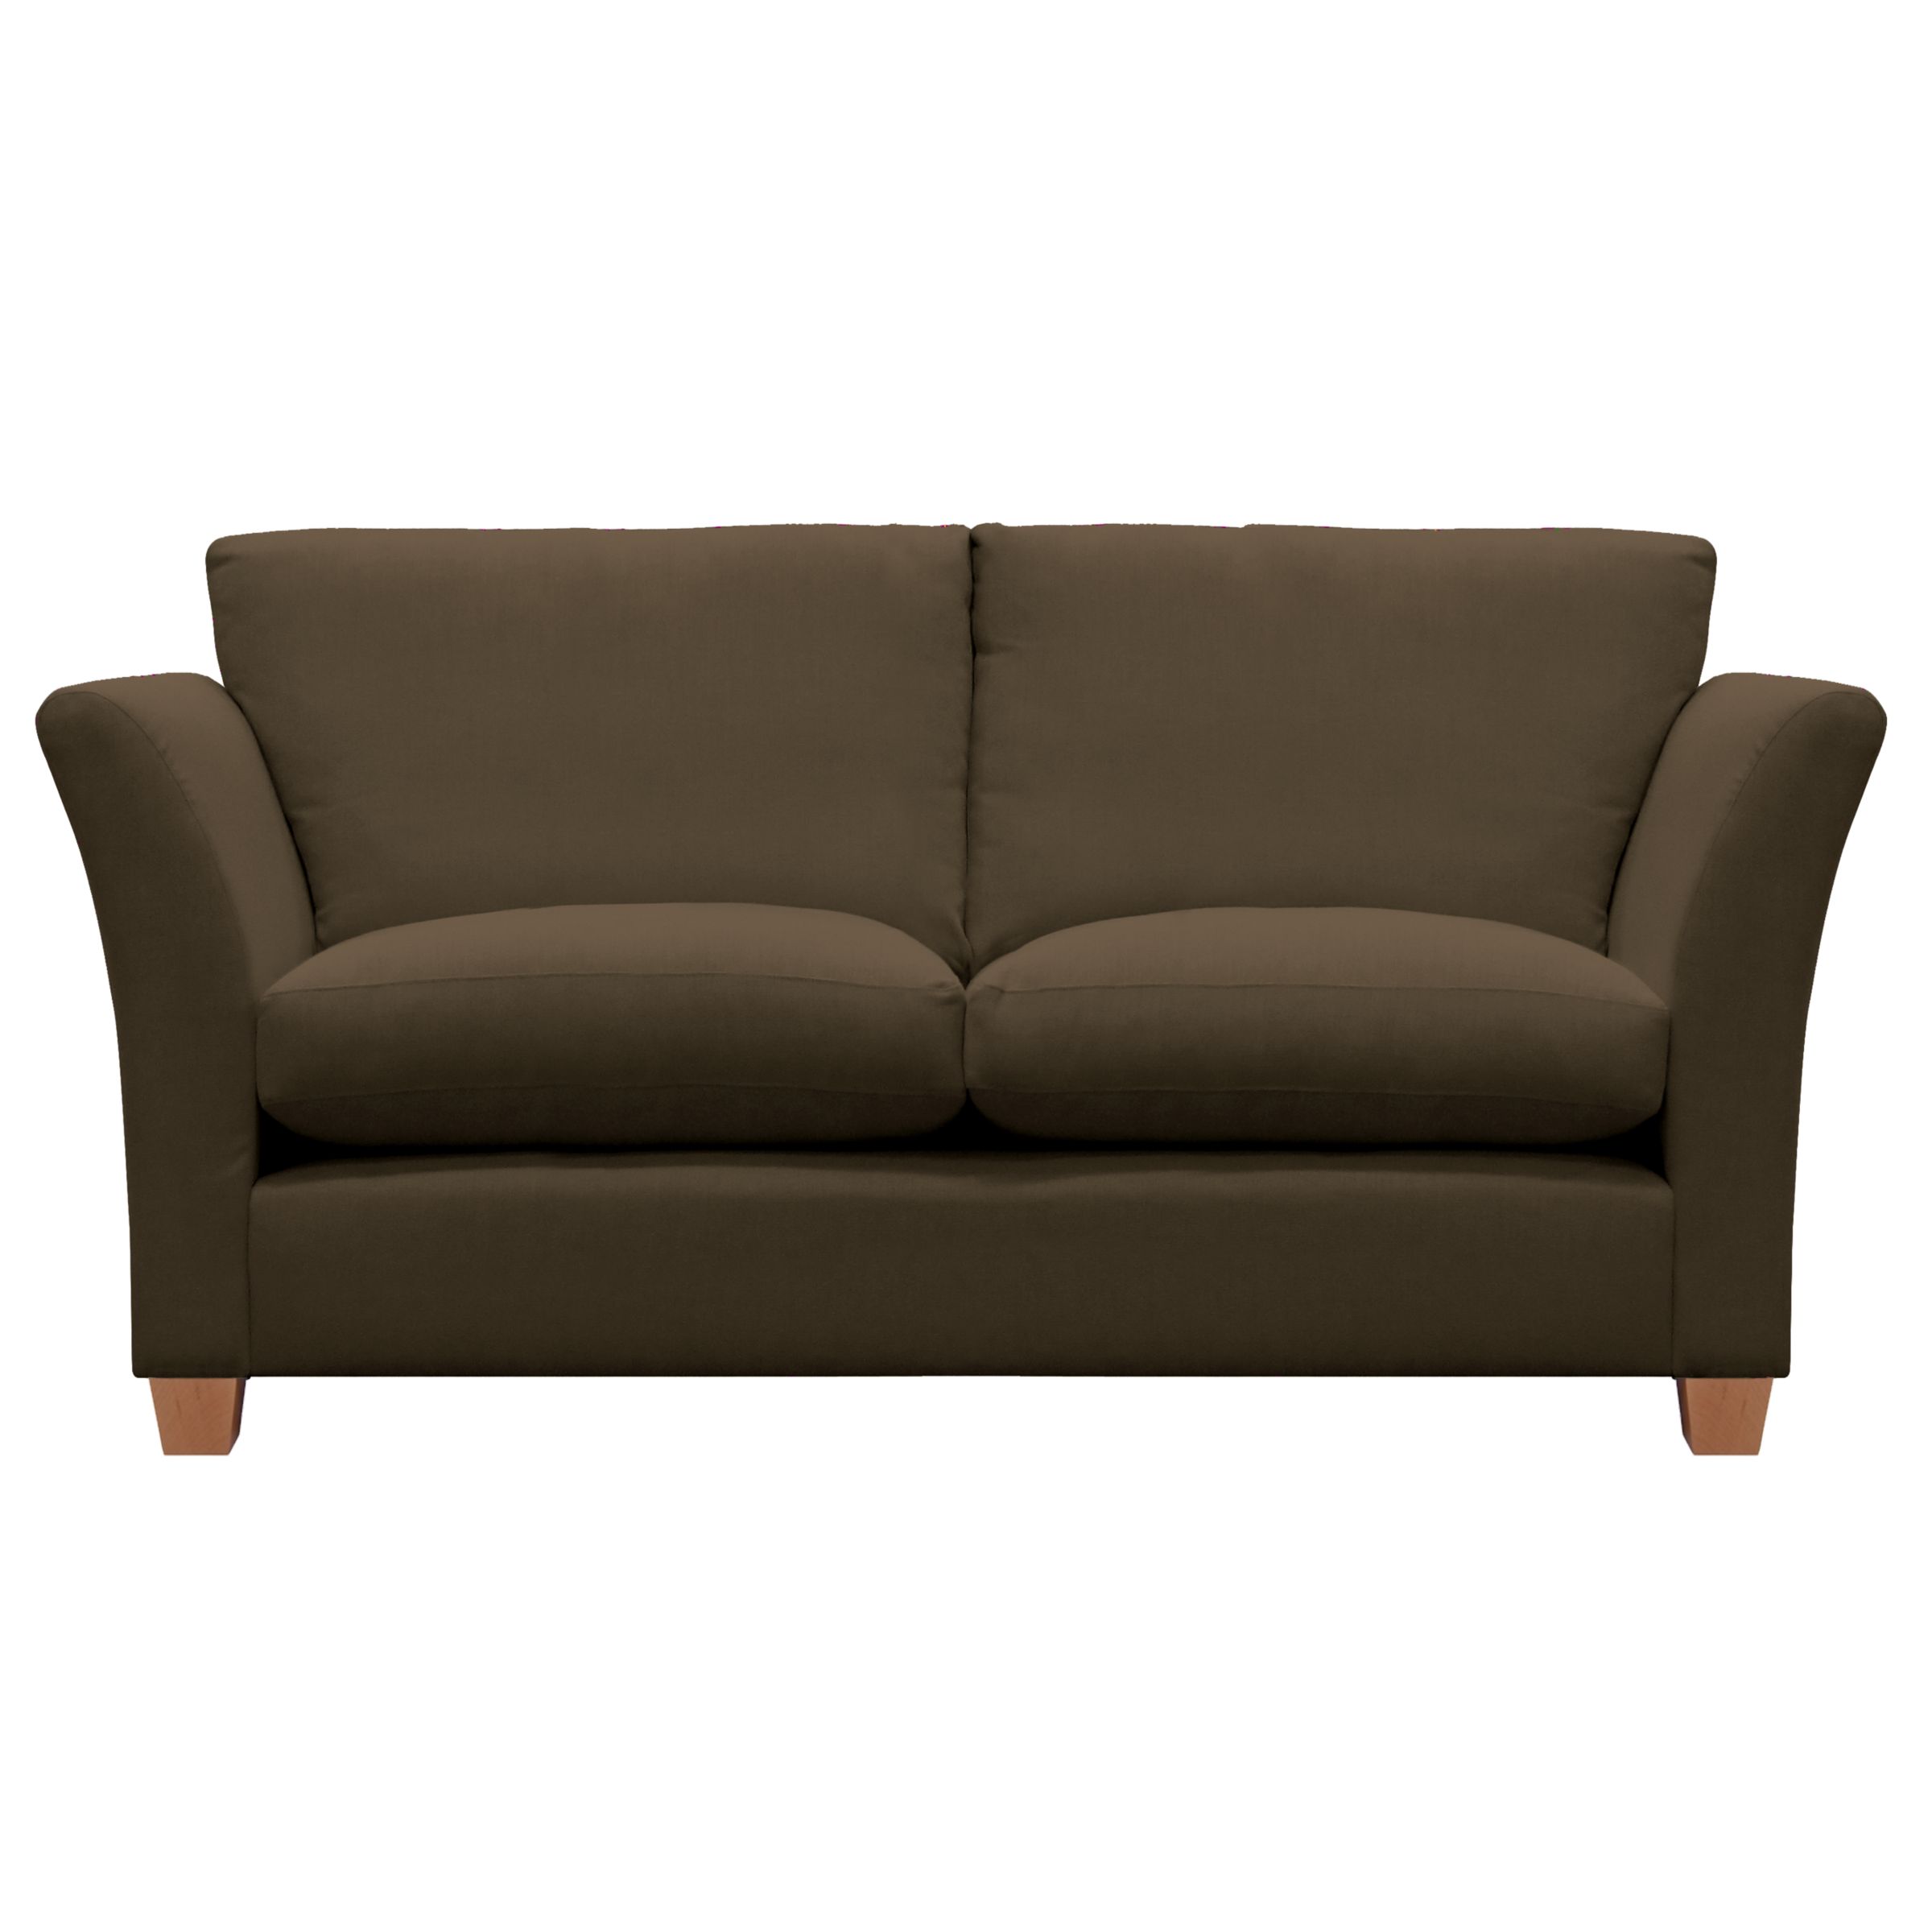 John Lewis Options Flare Arm Medium Sofa, Eaton Chocolate, width 183cm